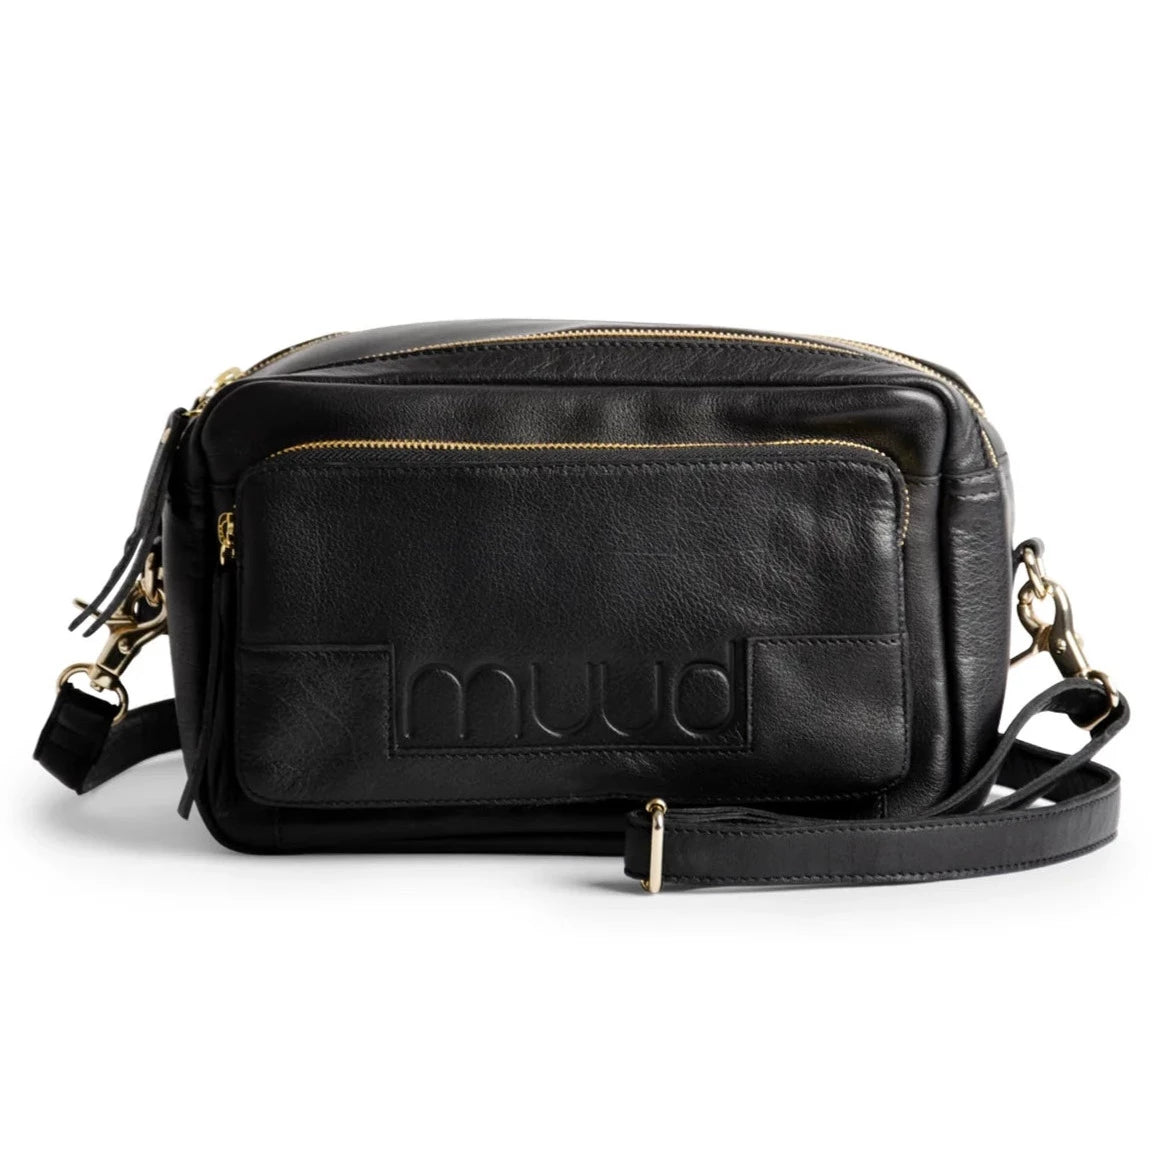 Muud Stavanger - Limited Edition Black - Bags - Muud - The Little Yarn Store